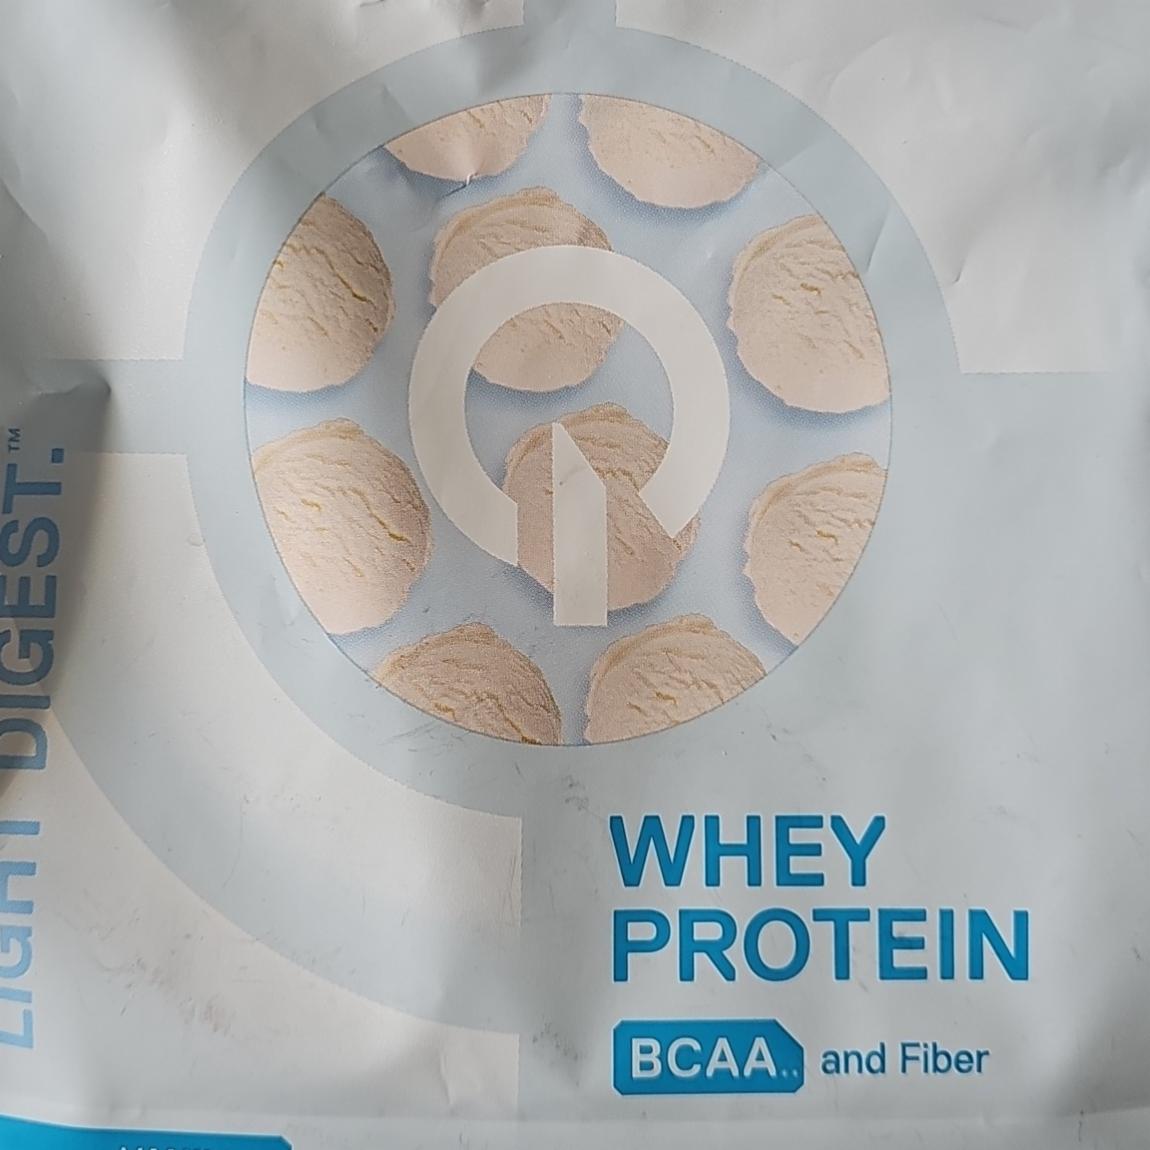 Fotografie - Wey protein BCAA and fiber light digest.